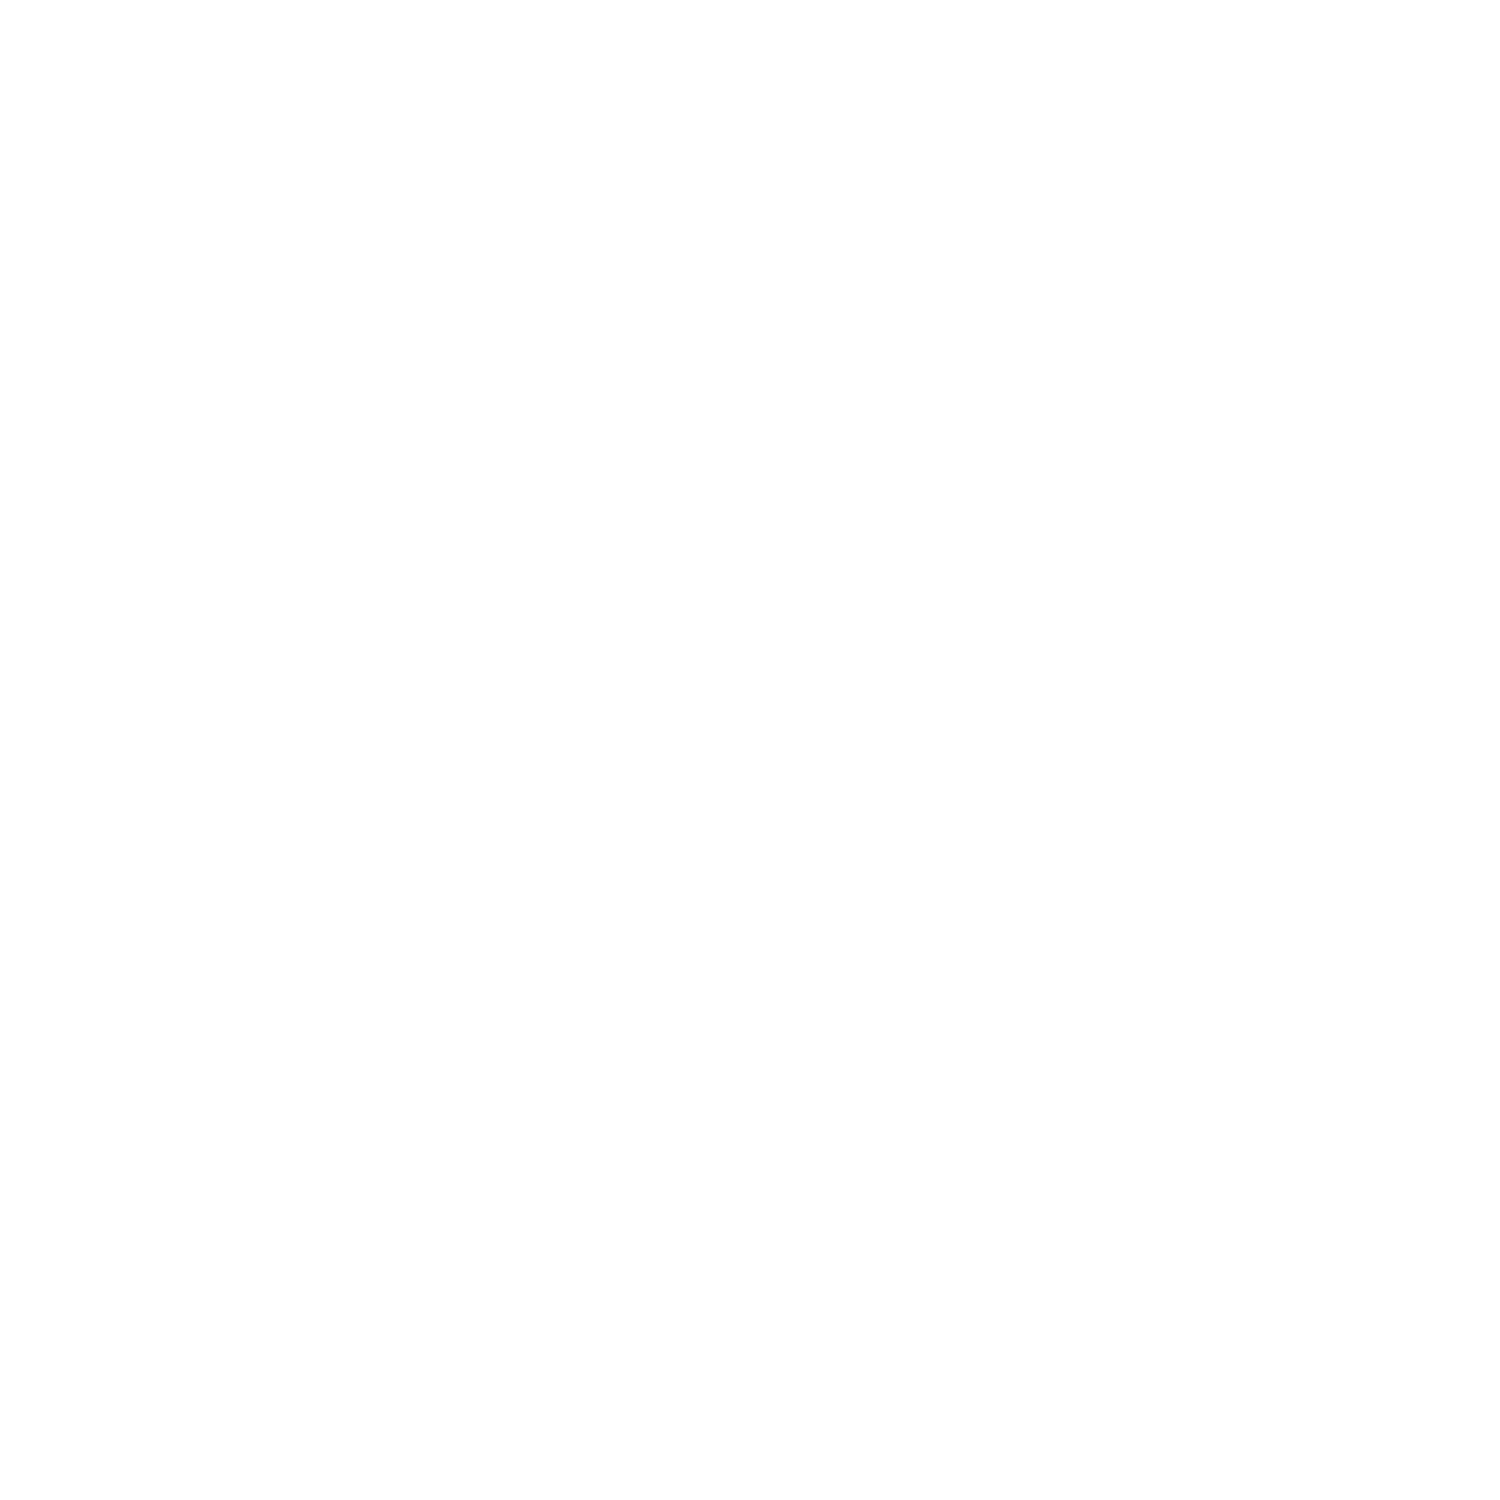 Joseph Salon of Charleston